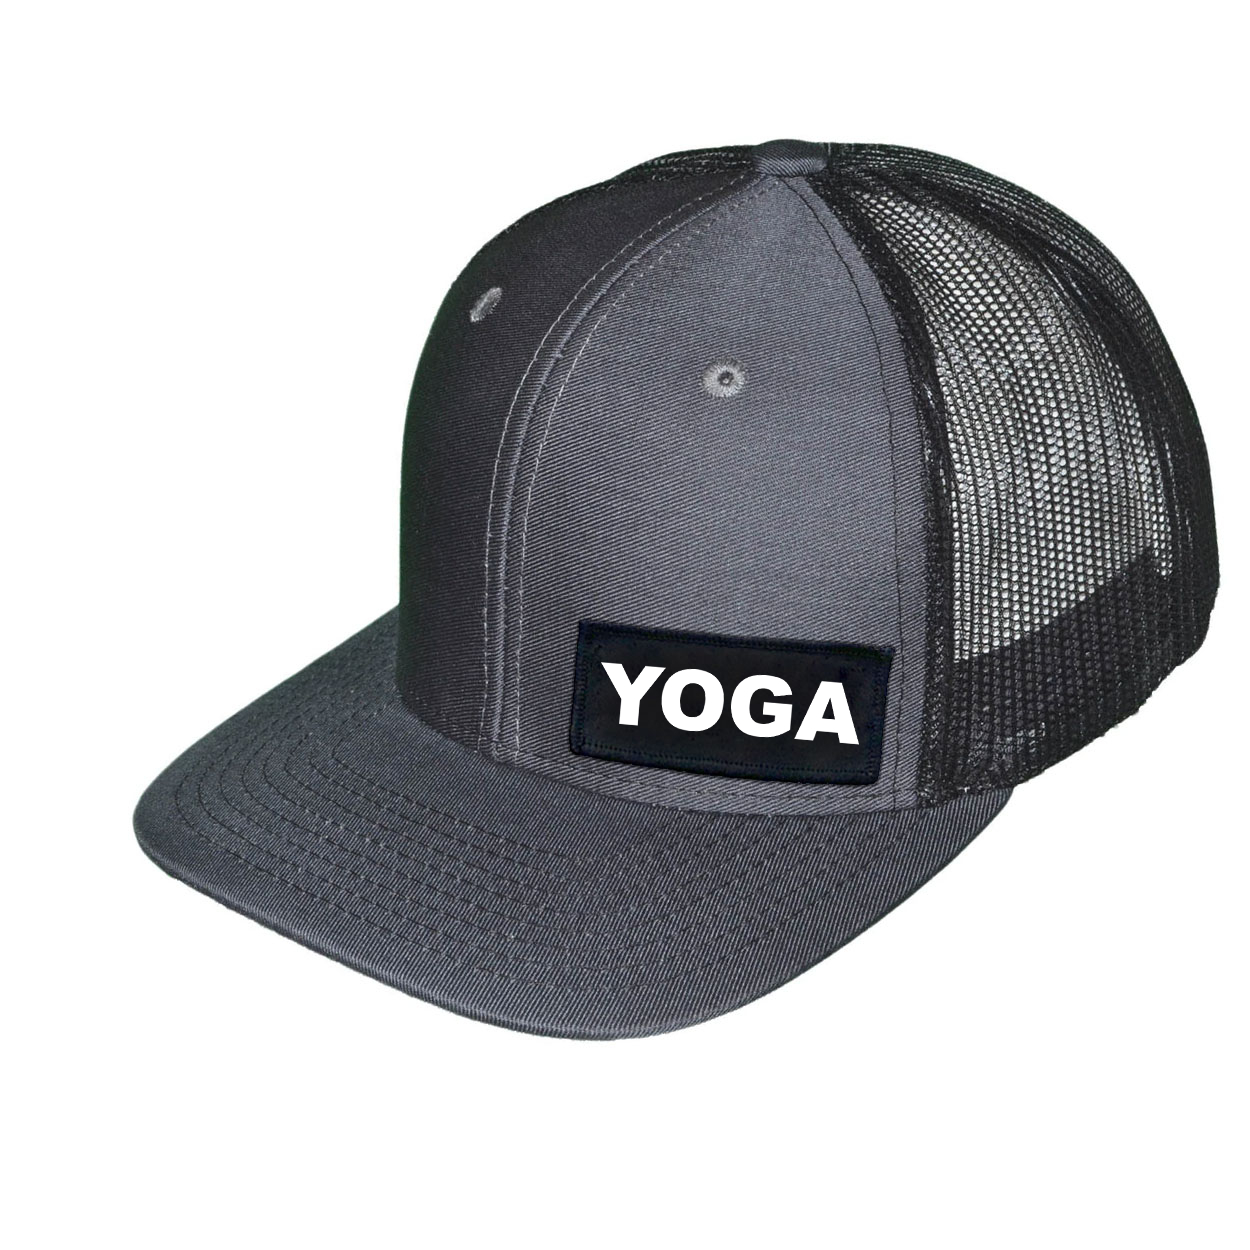 Yoga Brand Logo Night Out Woven Patch Snapback Trucker Hat Dark Gray/Black (White Logo)